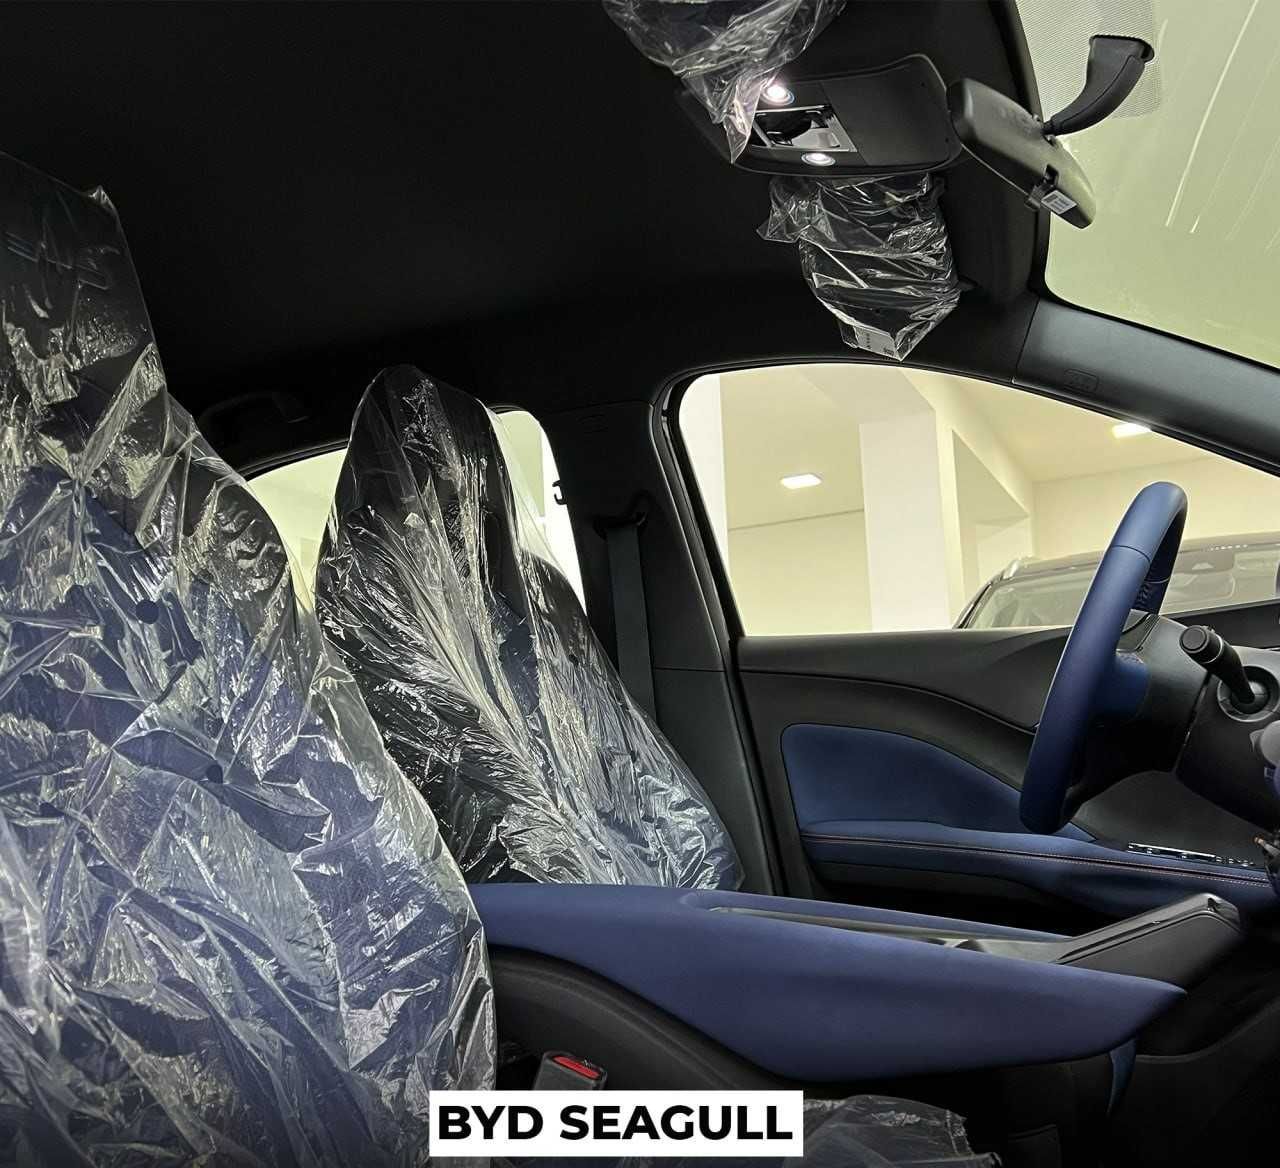 BYD seagull eng qulay elektromobil